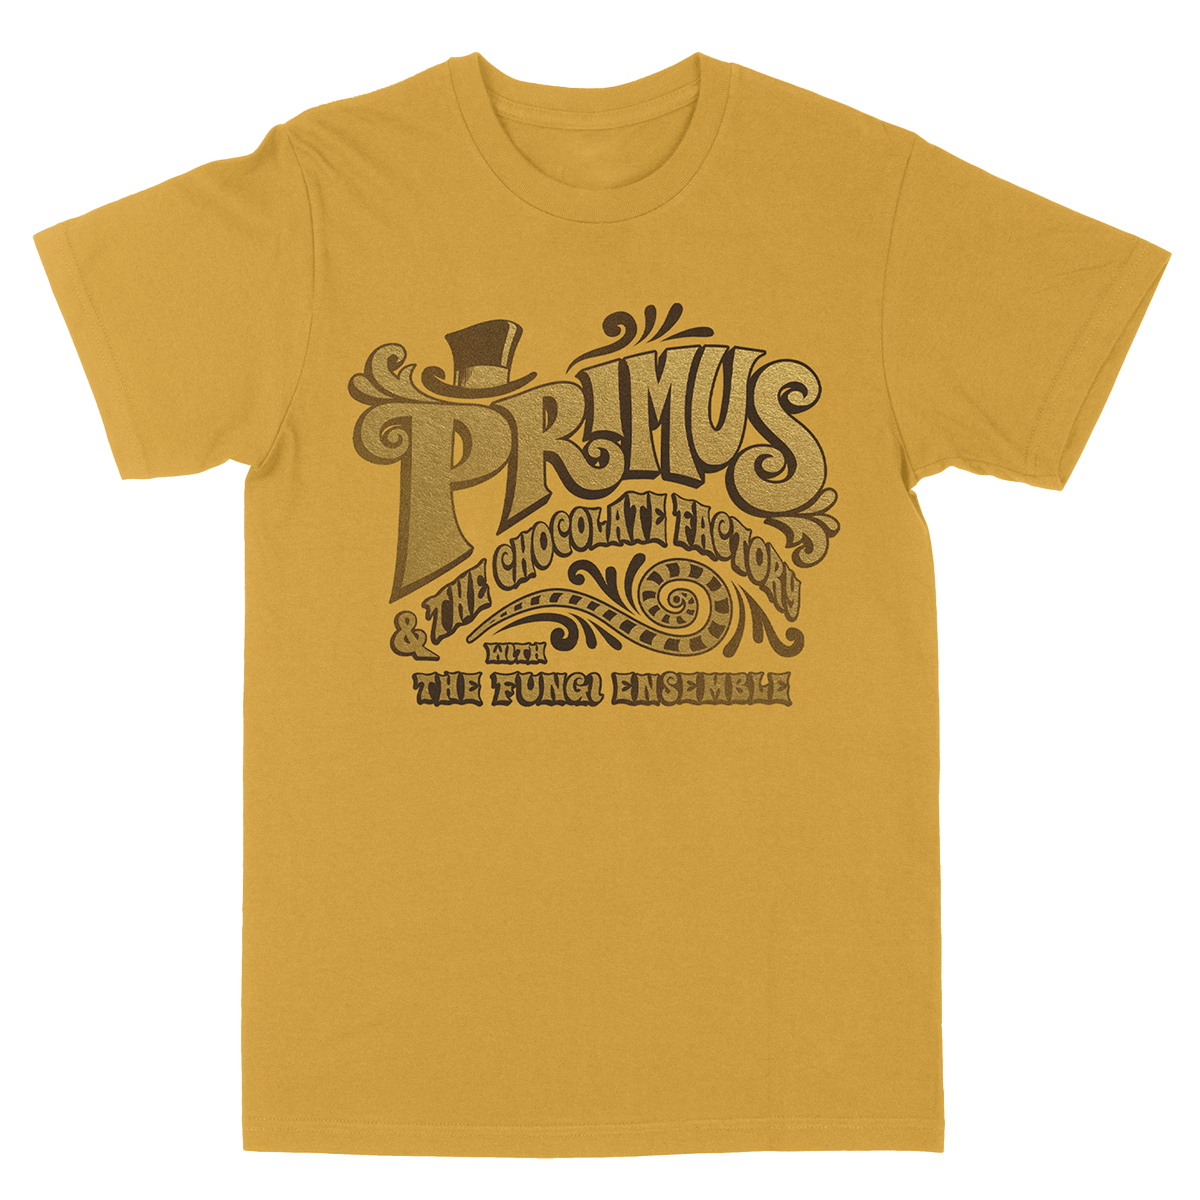 Primus - Chocolate Factory T-Shirt